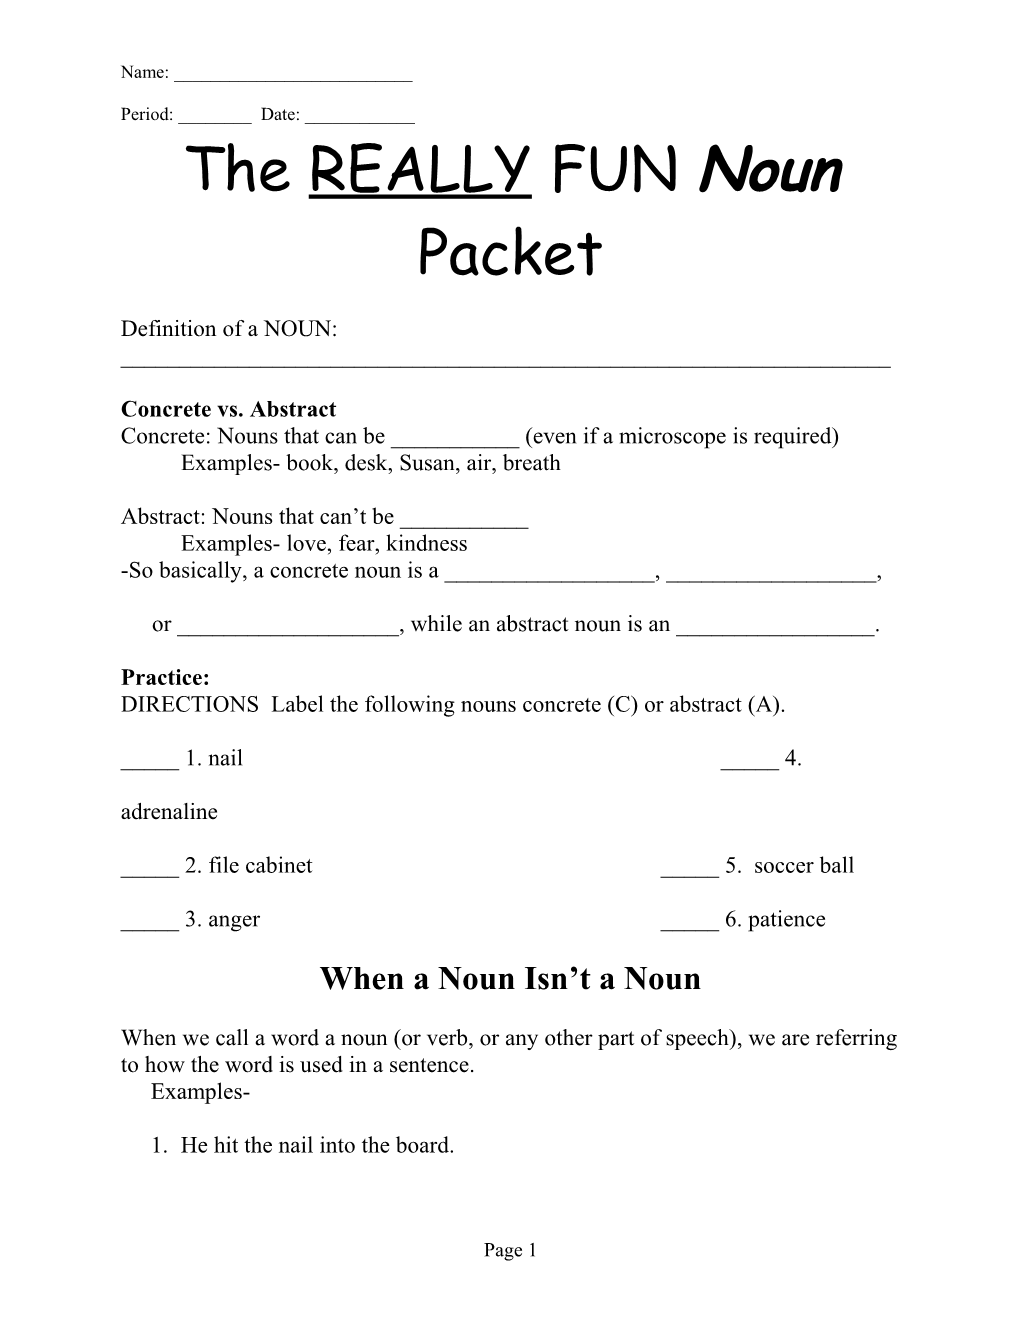 The REALLY FUN Noun Packet